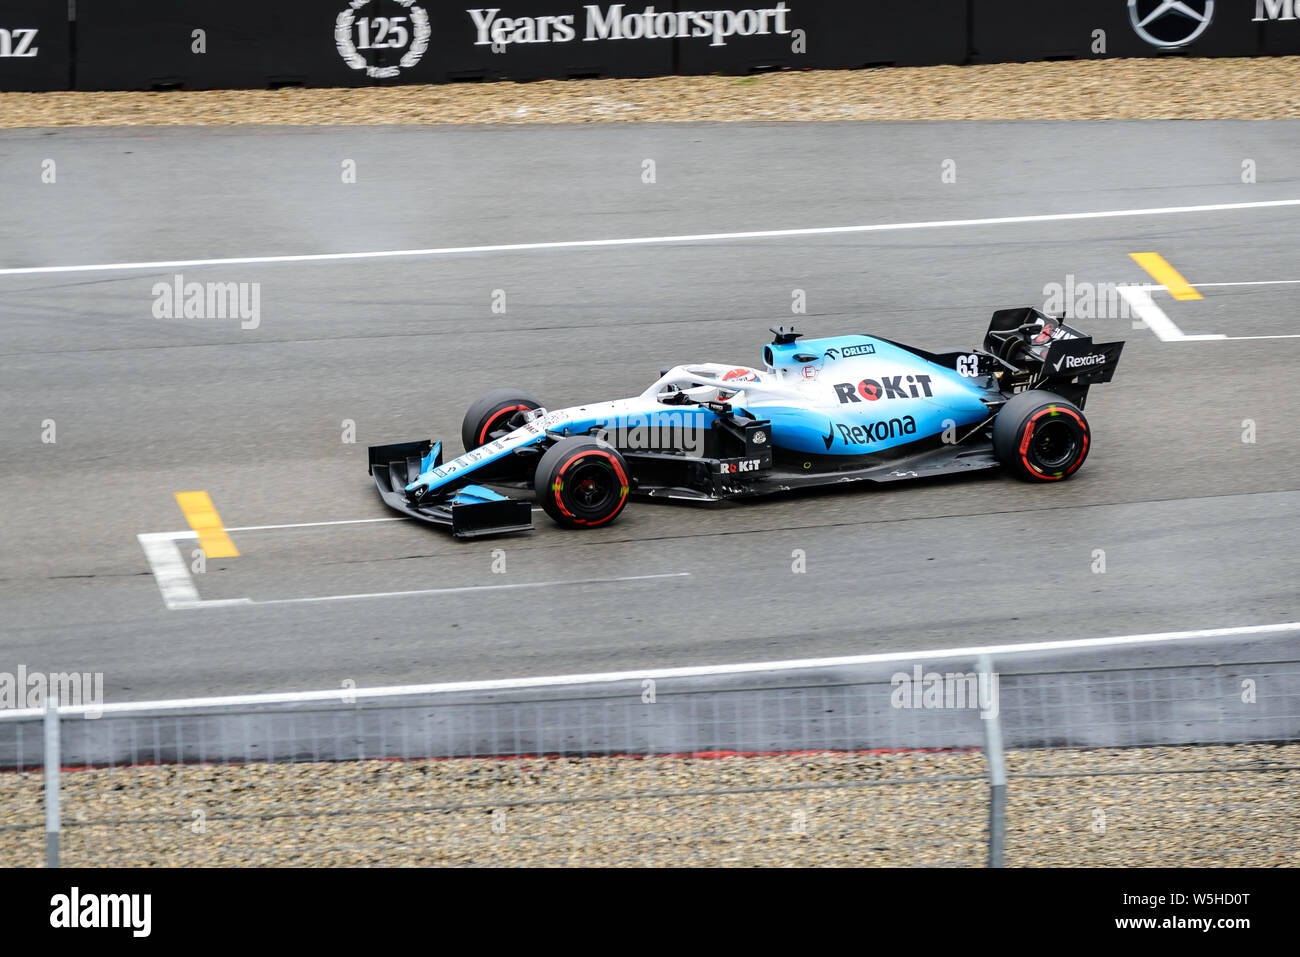 Formel 1 GP Deutschland in Hockenheim, 28. Juli 2019: rokit Williams Racing, George Russell Stockfoto